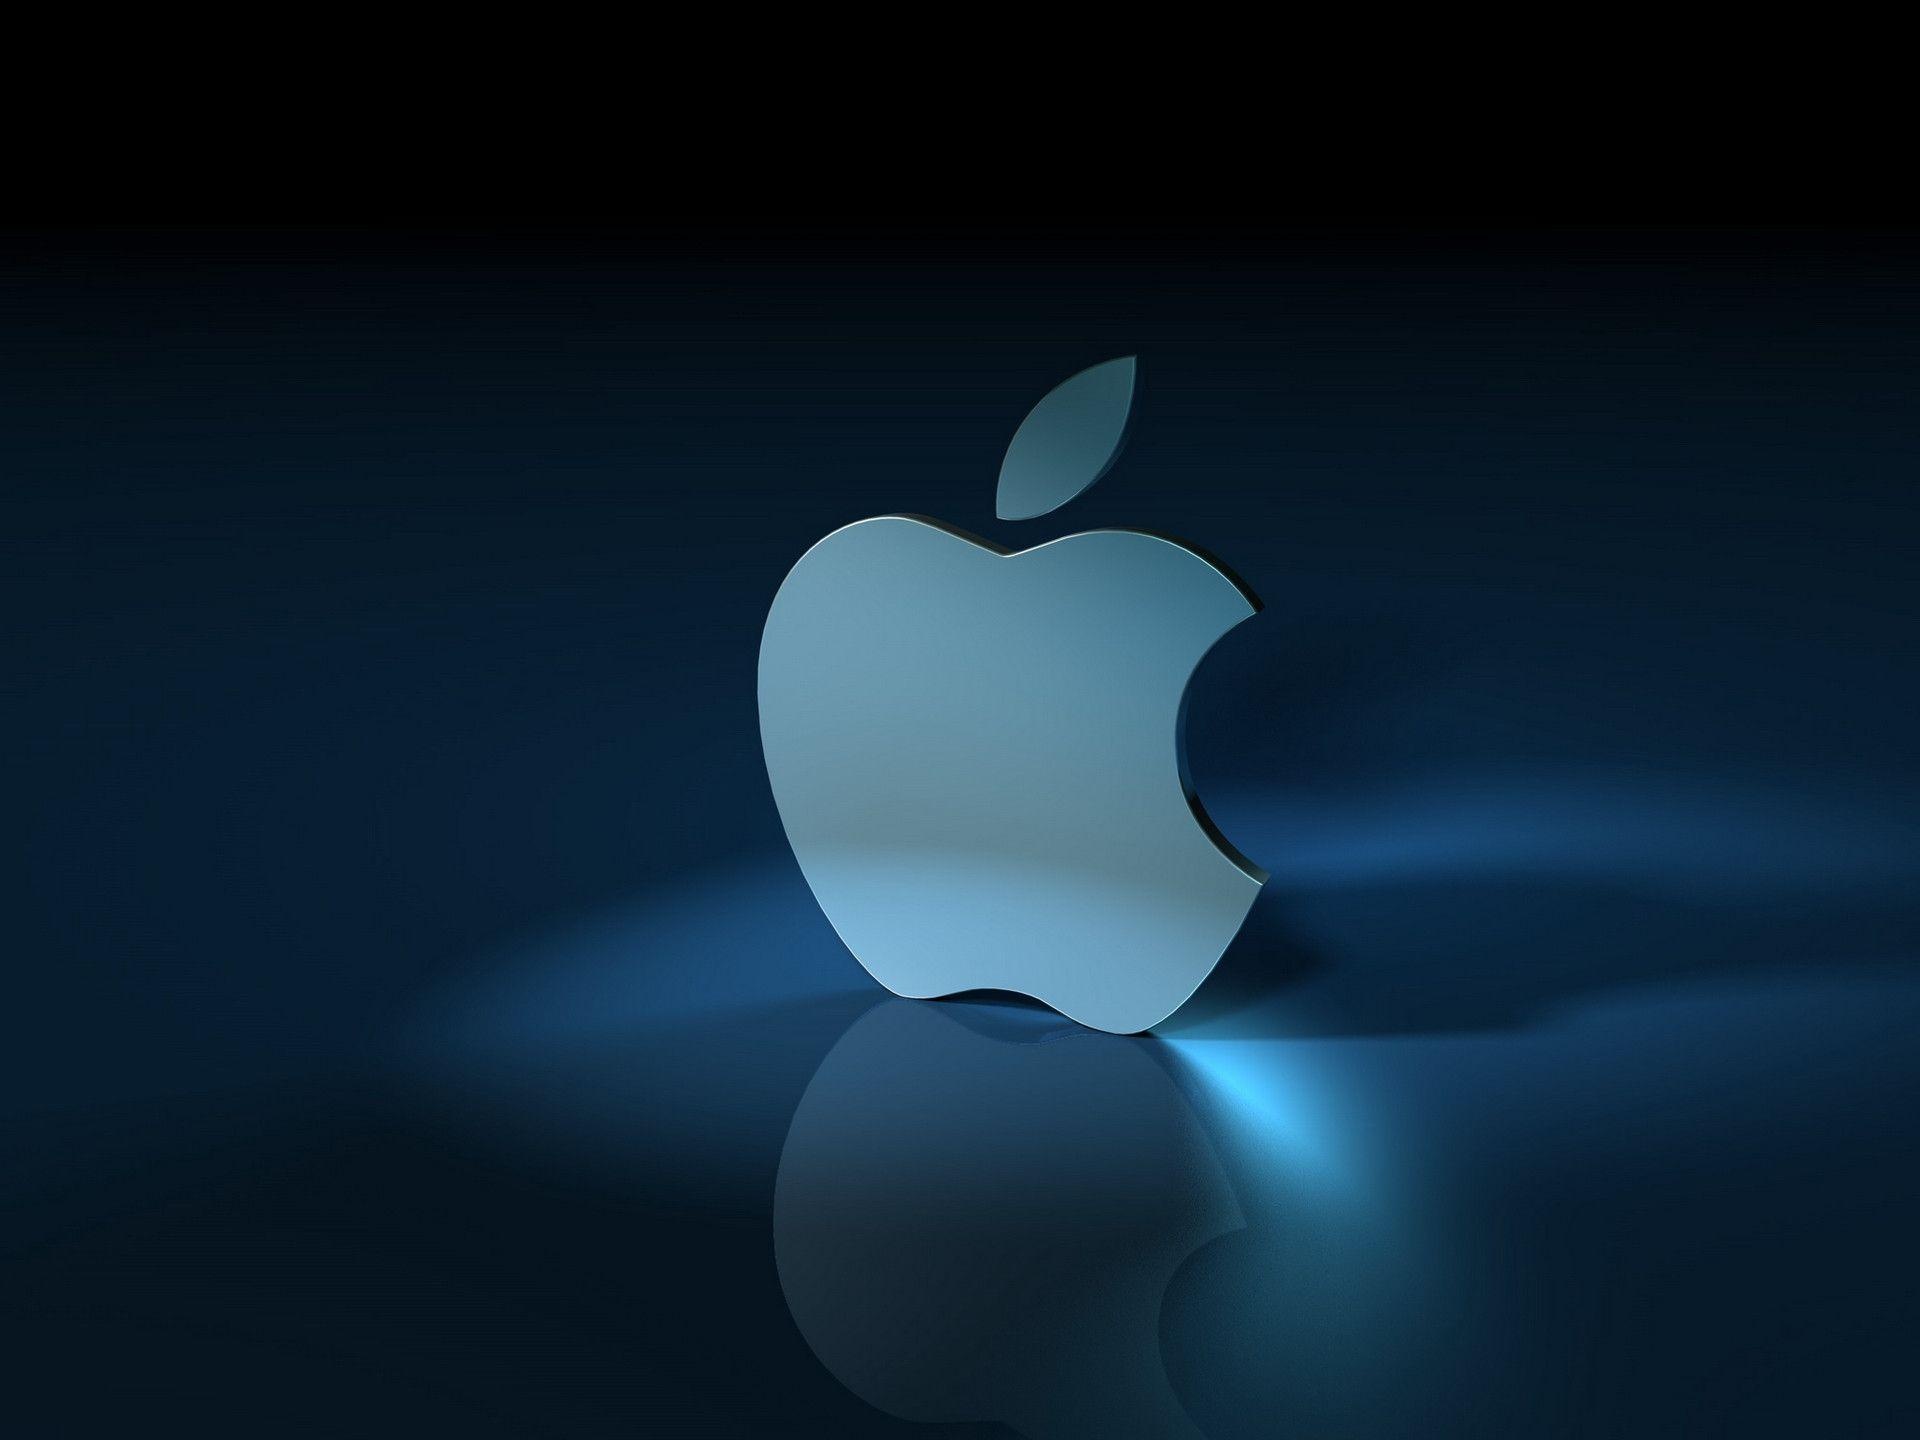 Sleek iMac logo, Apple's iconic symbol, Creative Mac wallpapers, Mac lover's delight, 1920x1440 HD Desktop